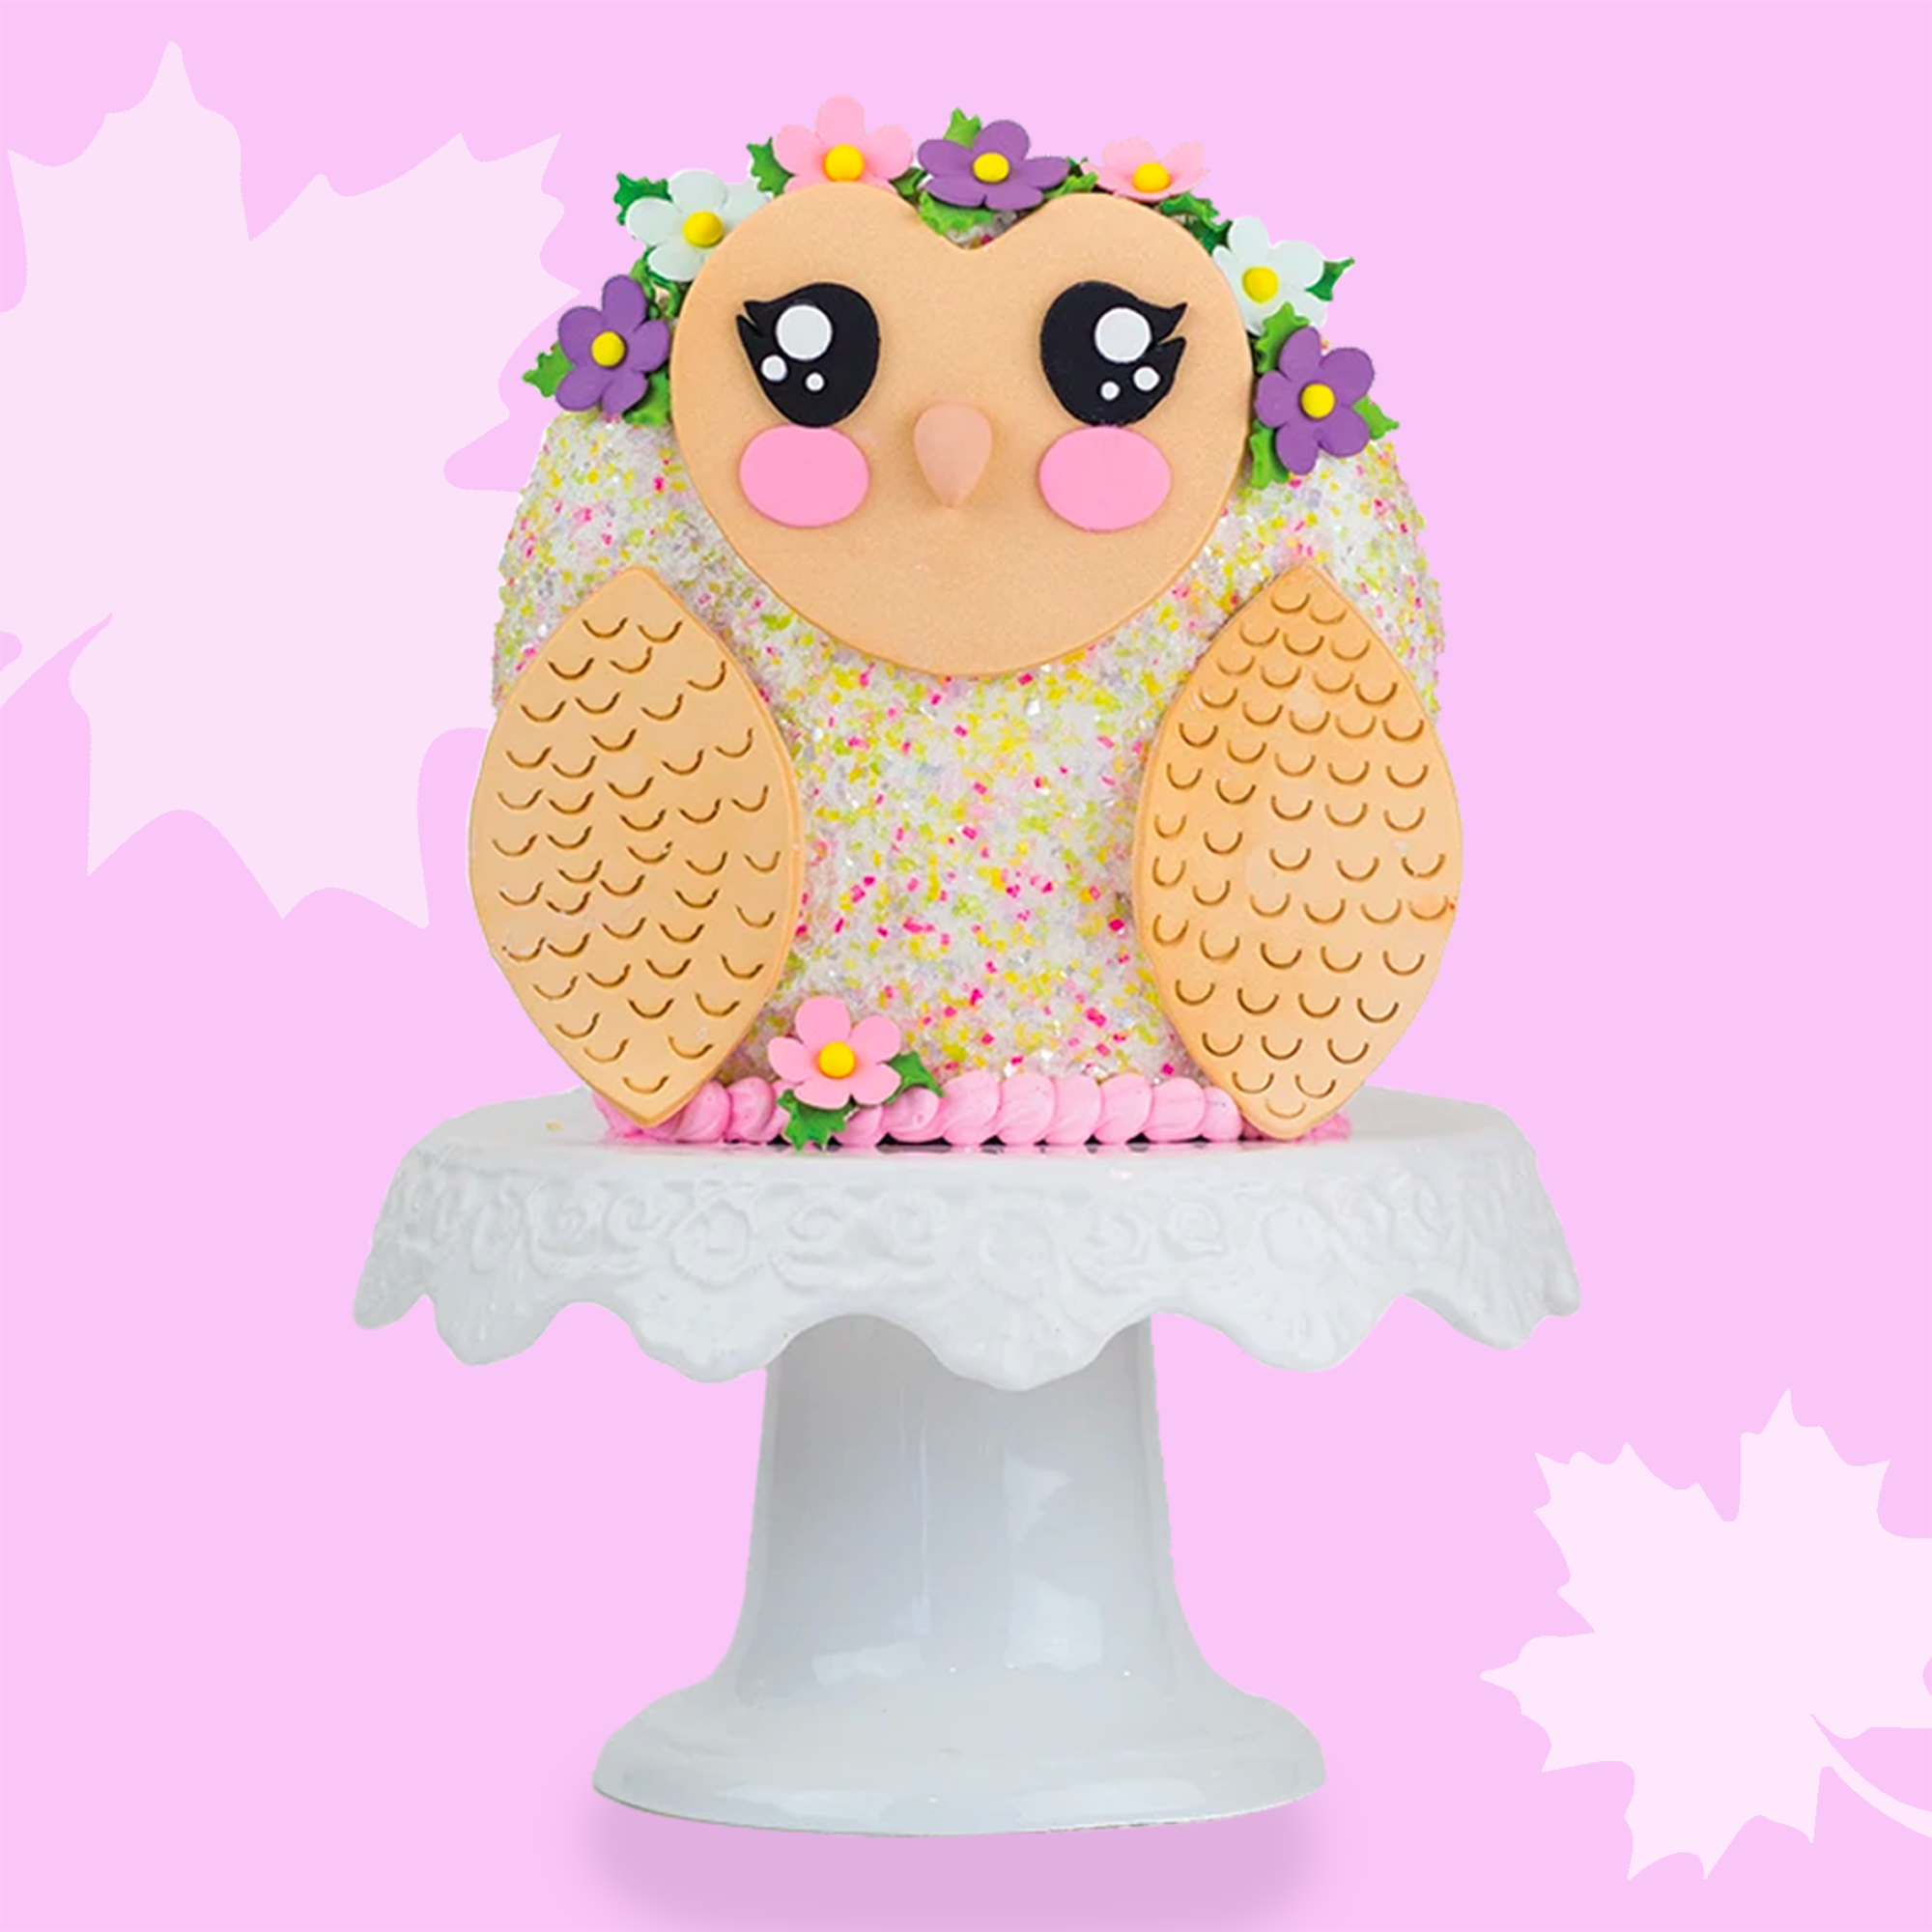 Spring Owl Cake Decorating Bundle (Cake Decor + In Bloom Glittery Sugar)